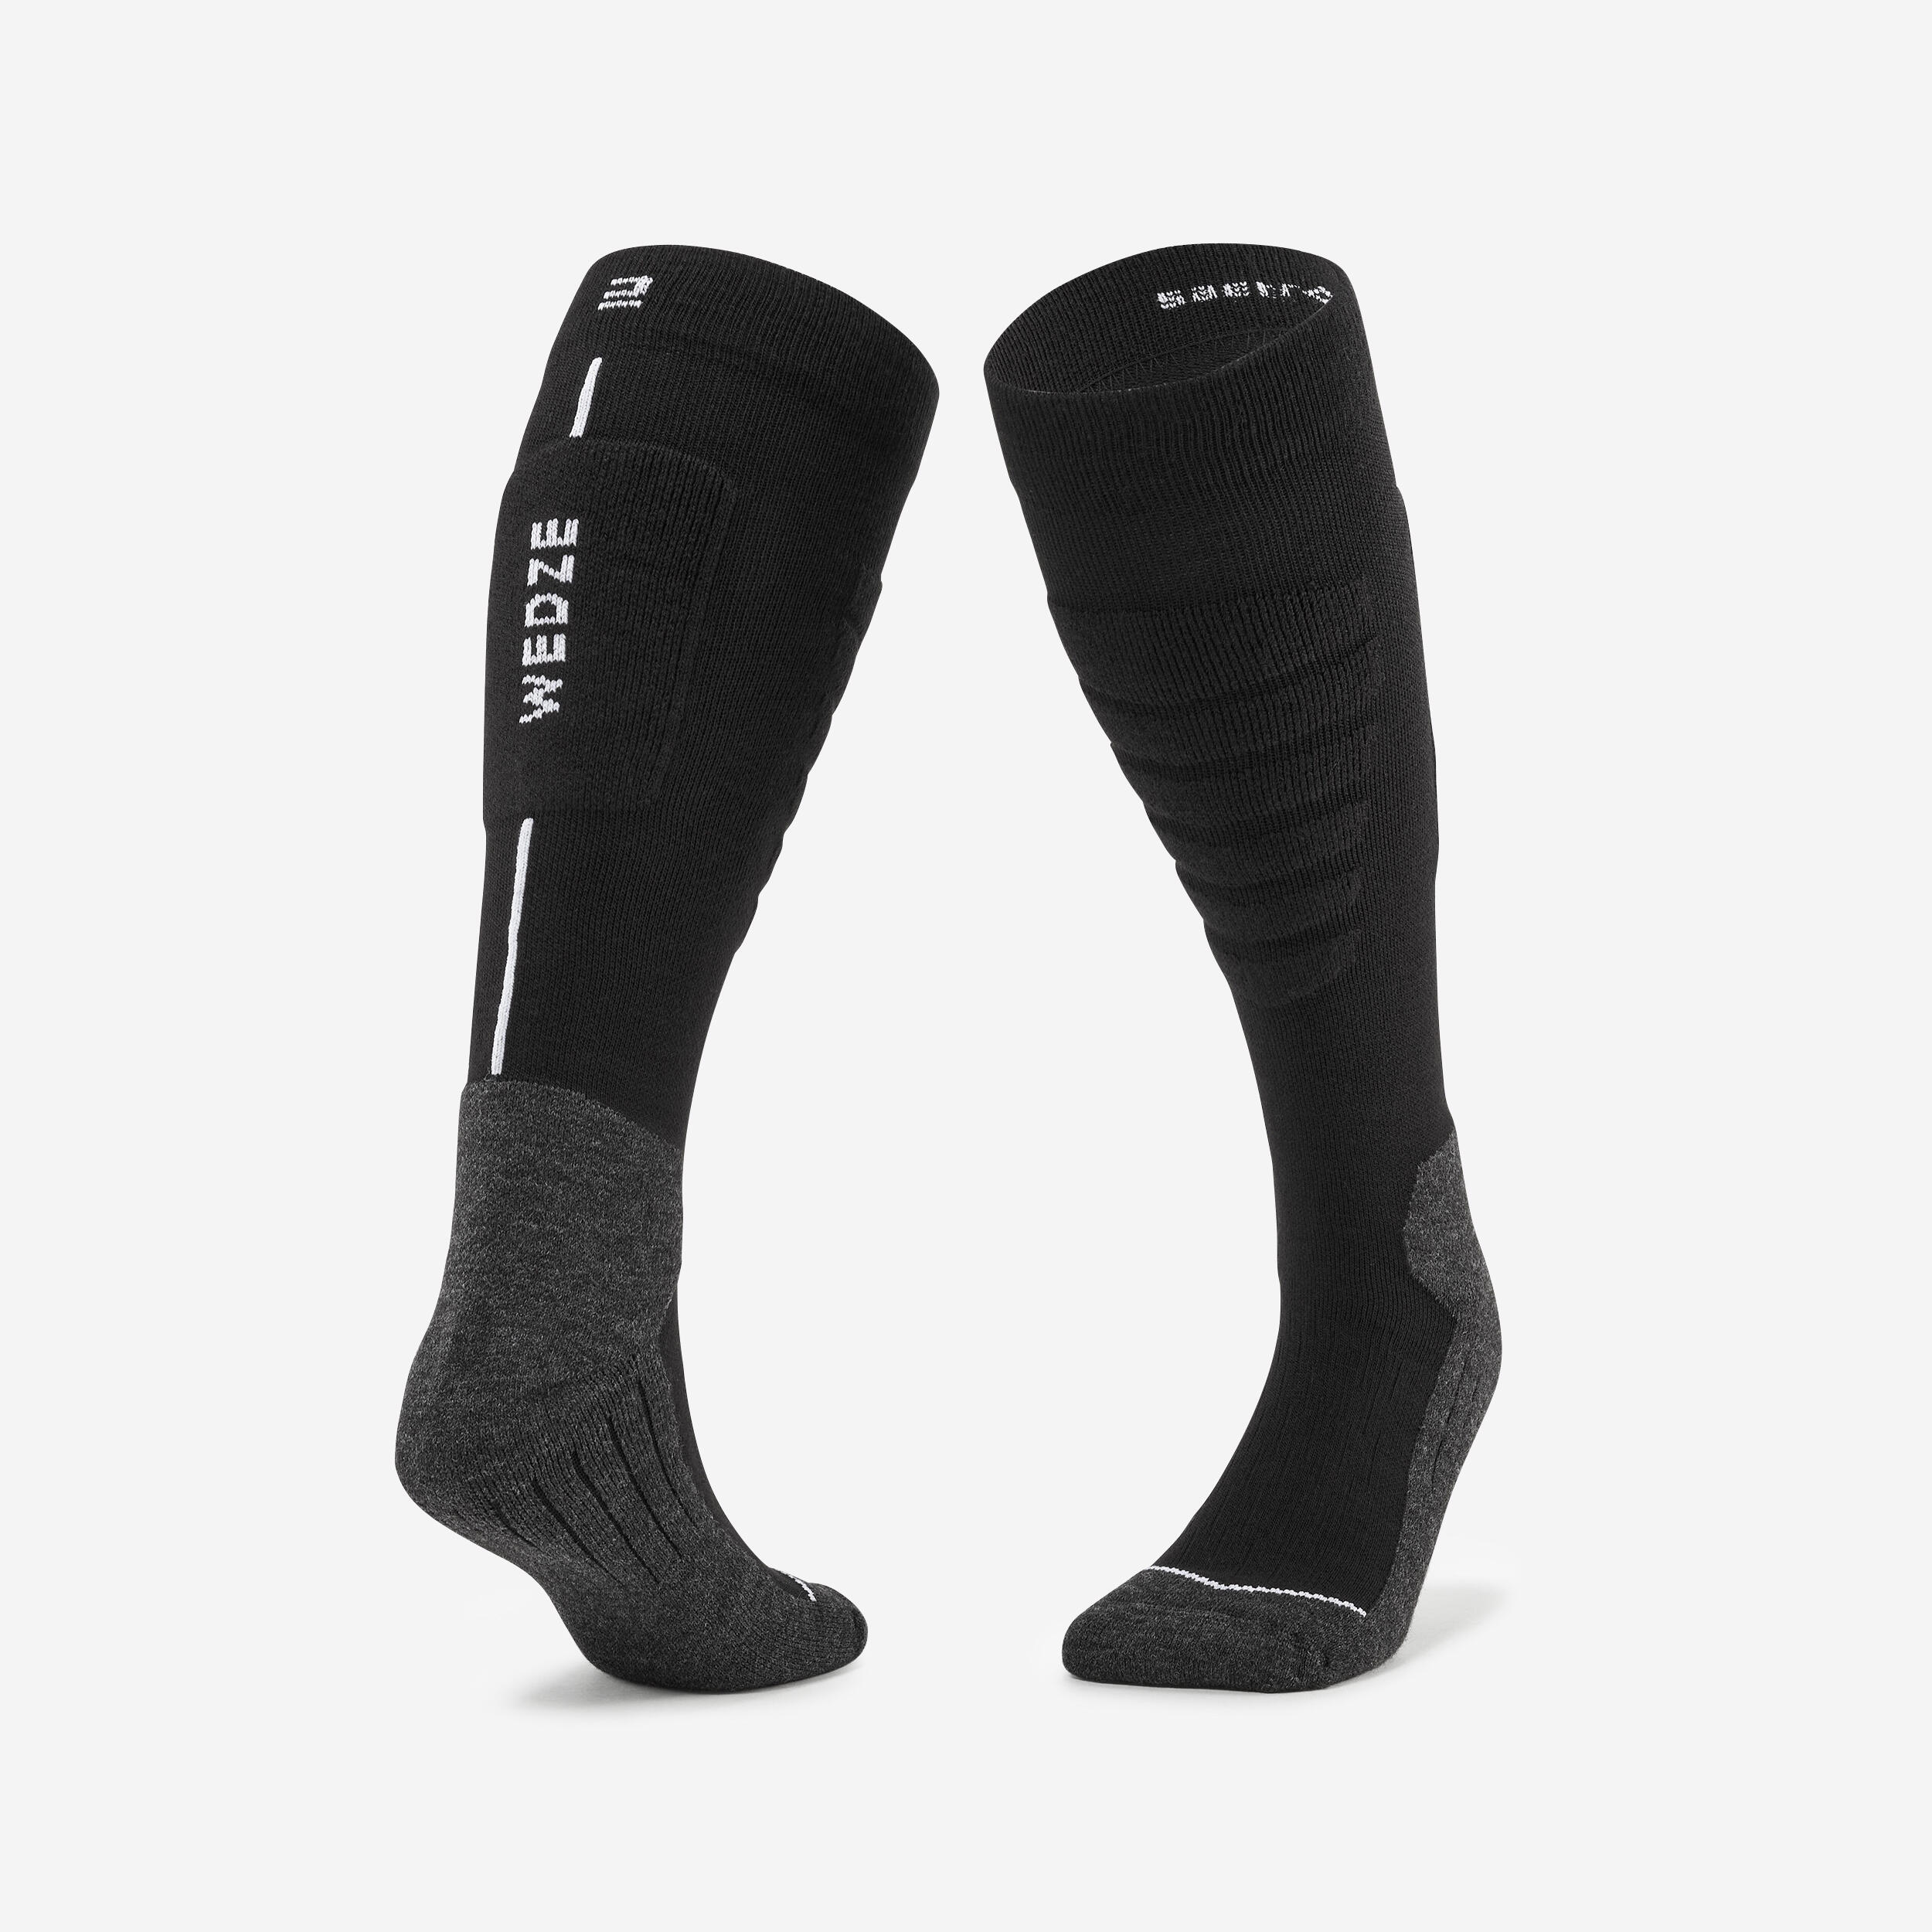 Adult ski and snowboard socks, 100 black and grey  1/9